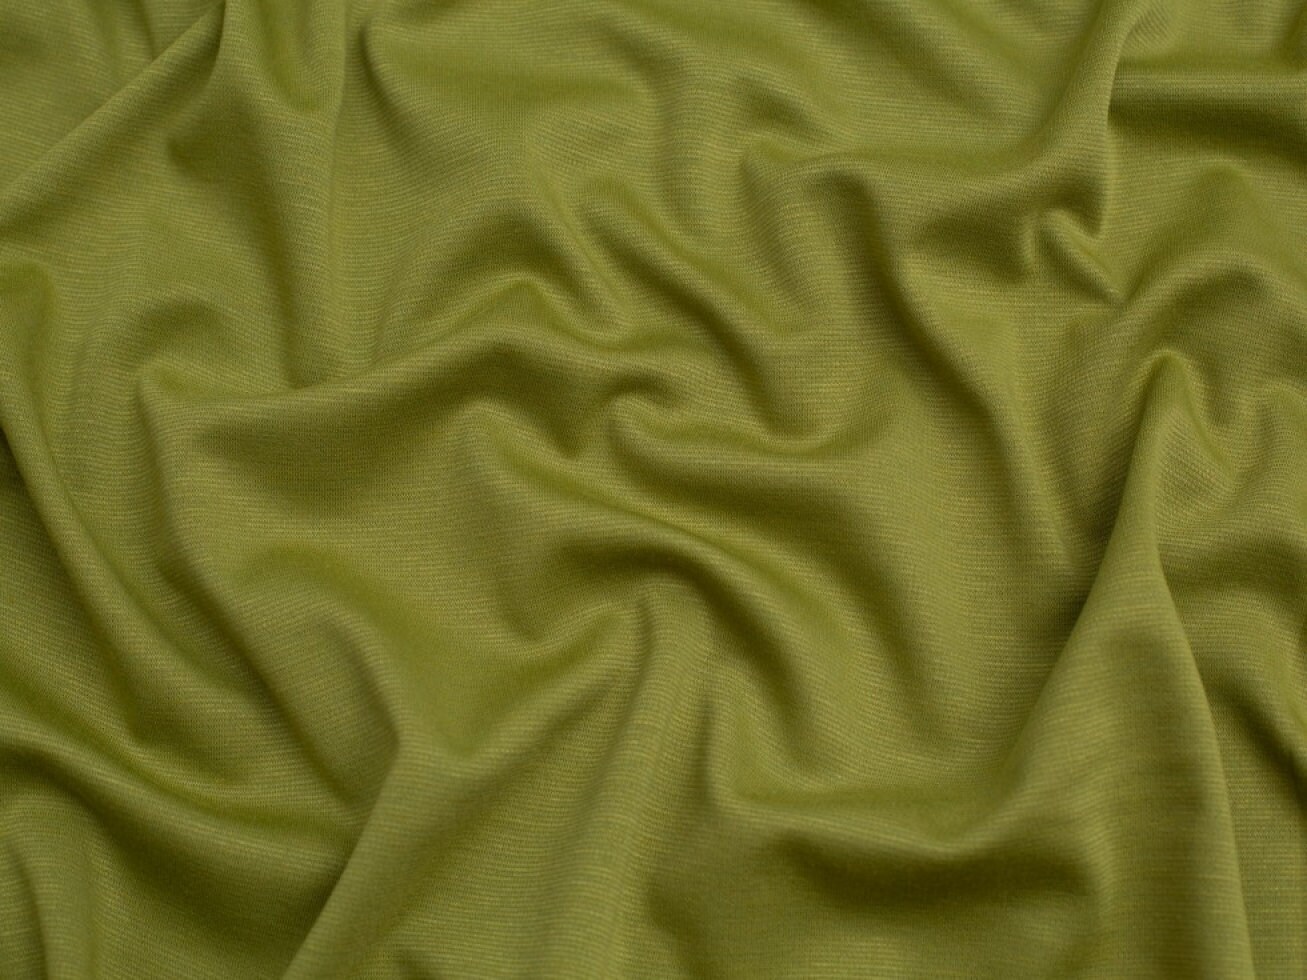 Minerva Core Range Brushed Ponte Roma Double Stretch Knit Fabric Lime Green  Plain Pattern OEKO-TEX Width 147cm / 58 per Metre 